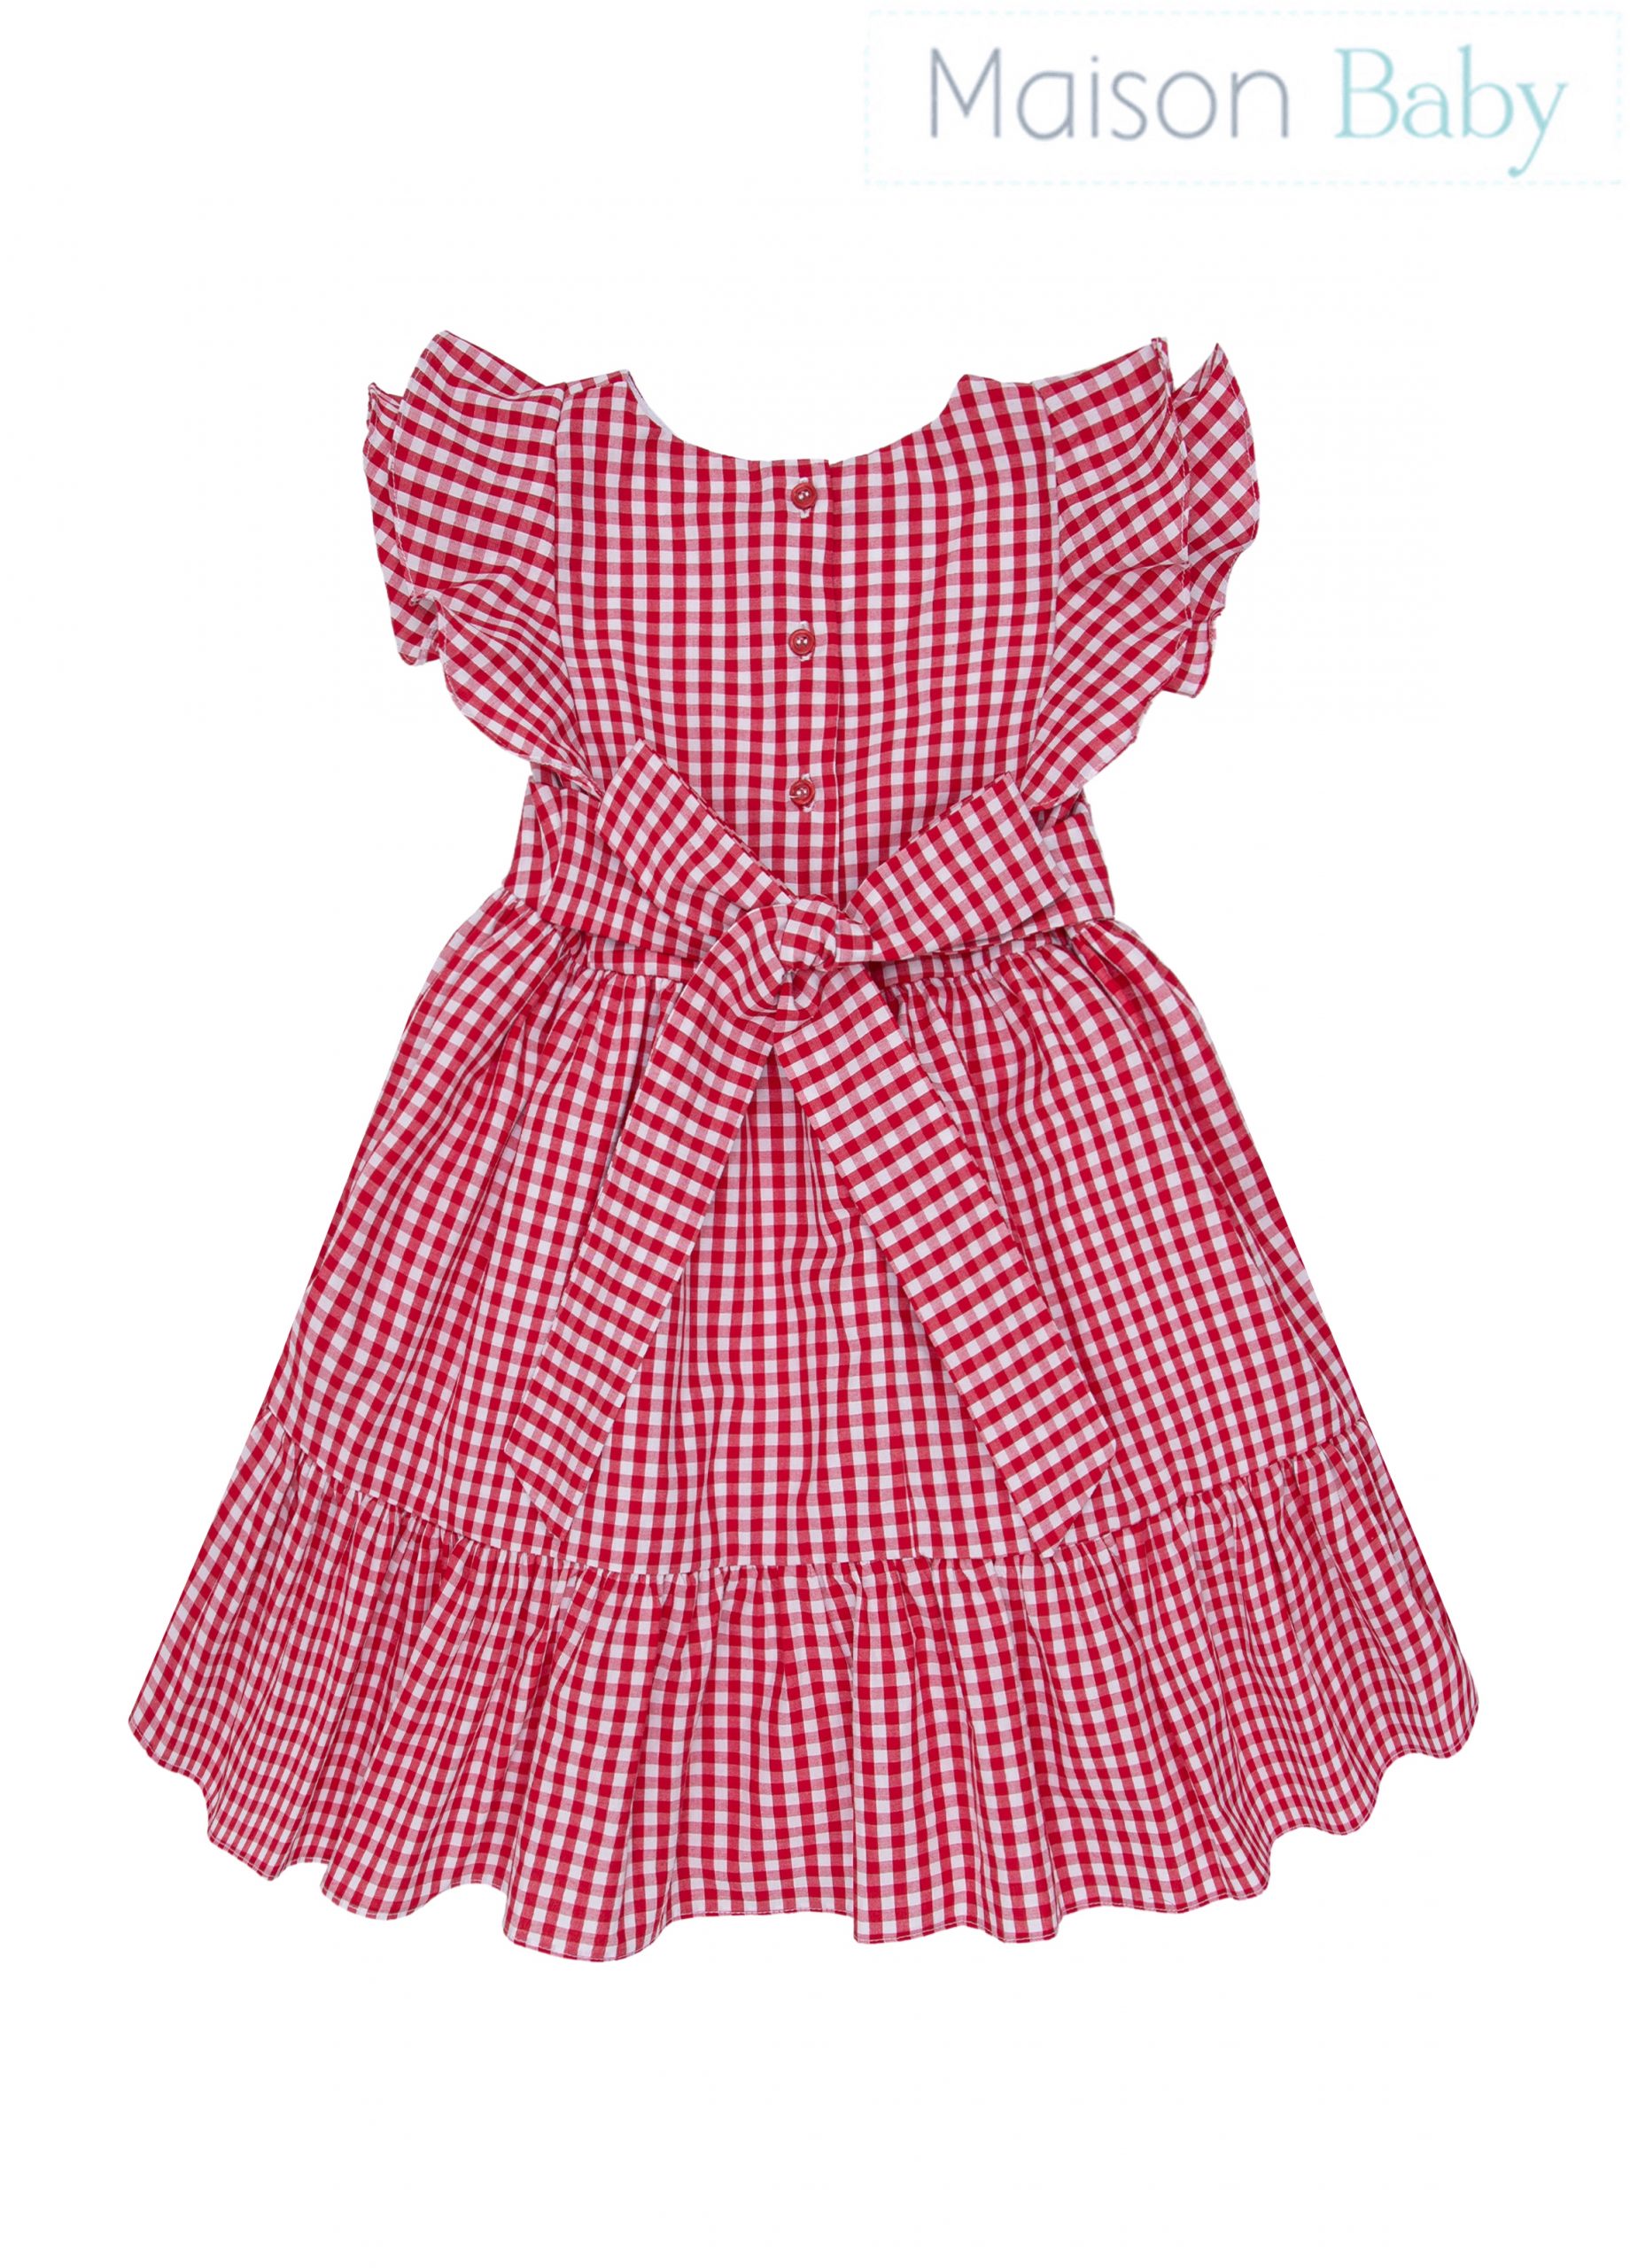 Vestido Infantil Xadrez Vermelho - Little Closet